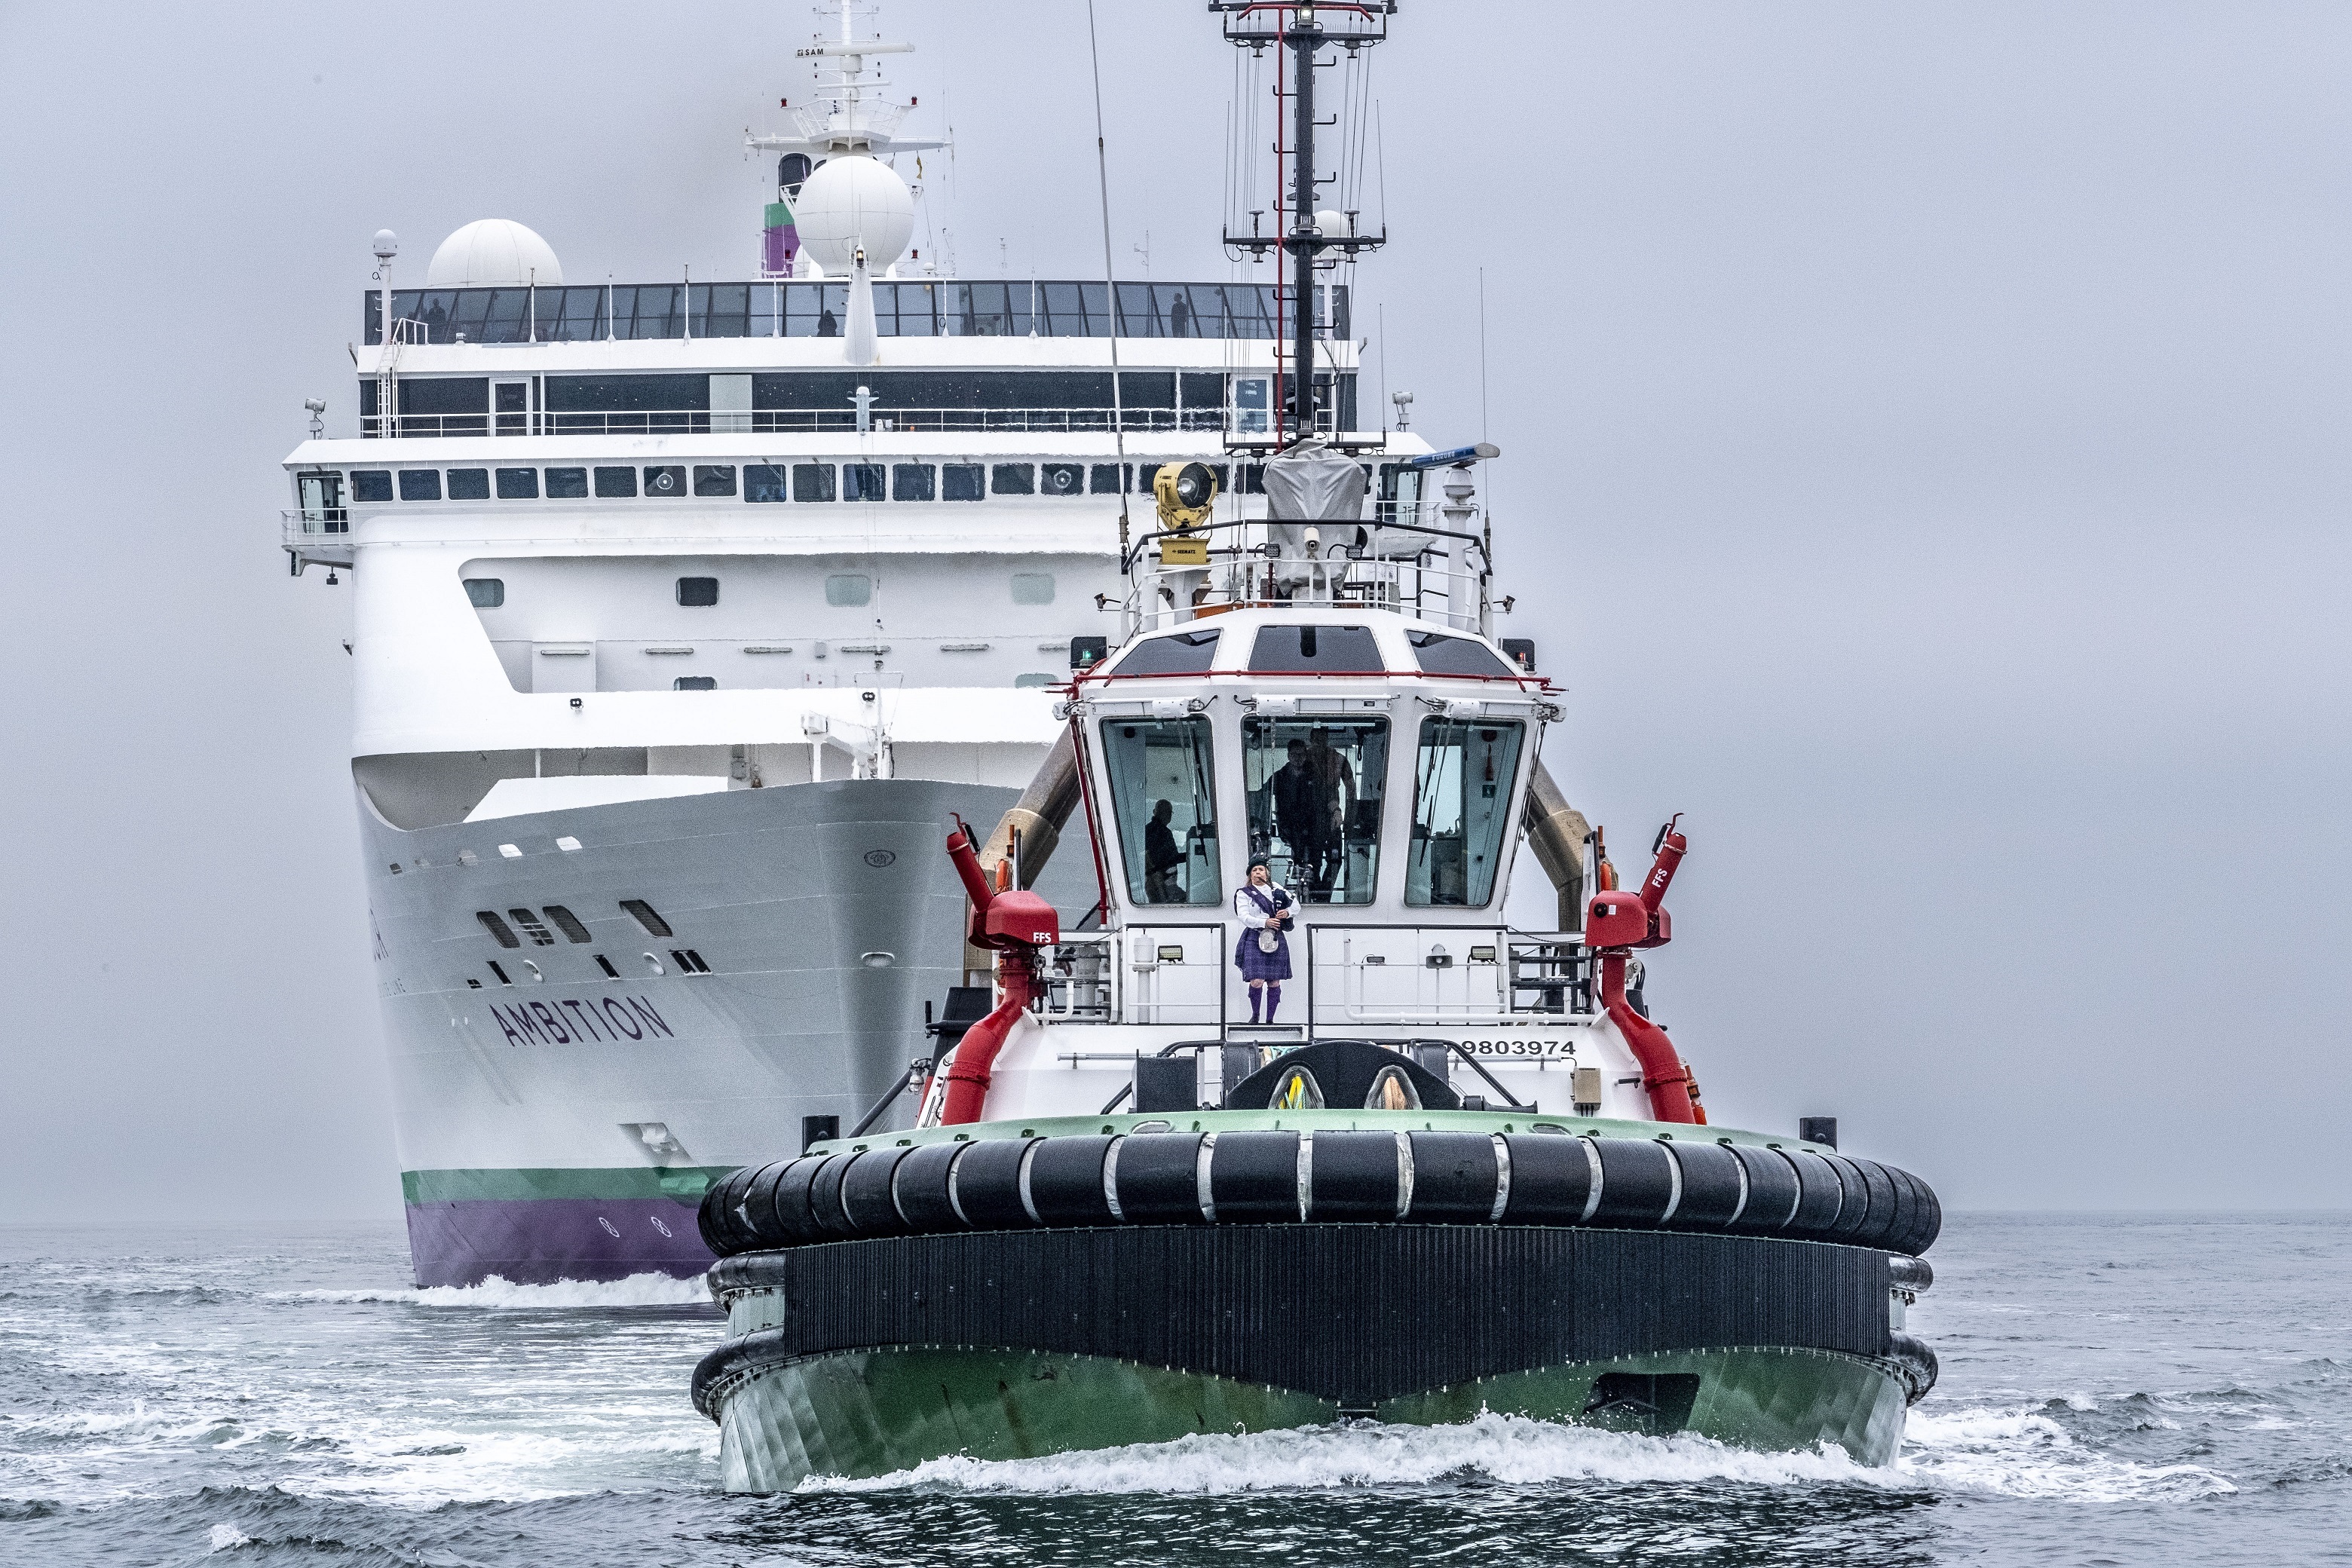 Capital Cruising begins busiest ever cruise season across their Scottish ports